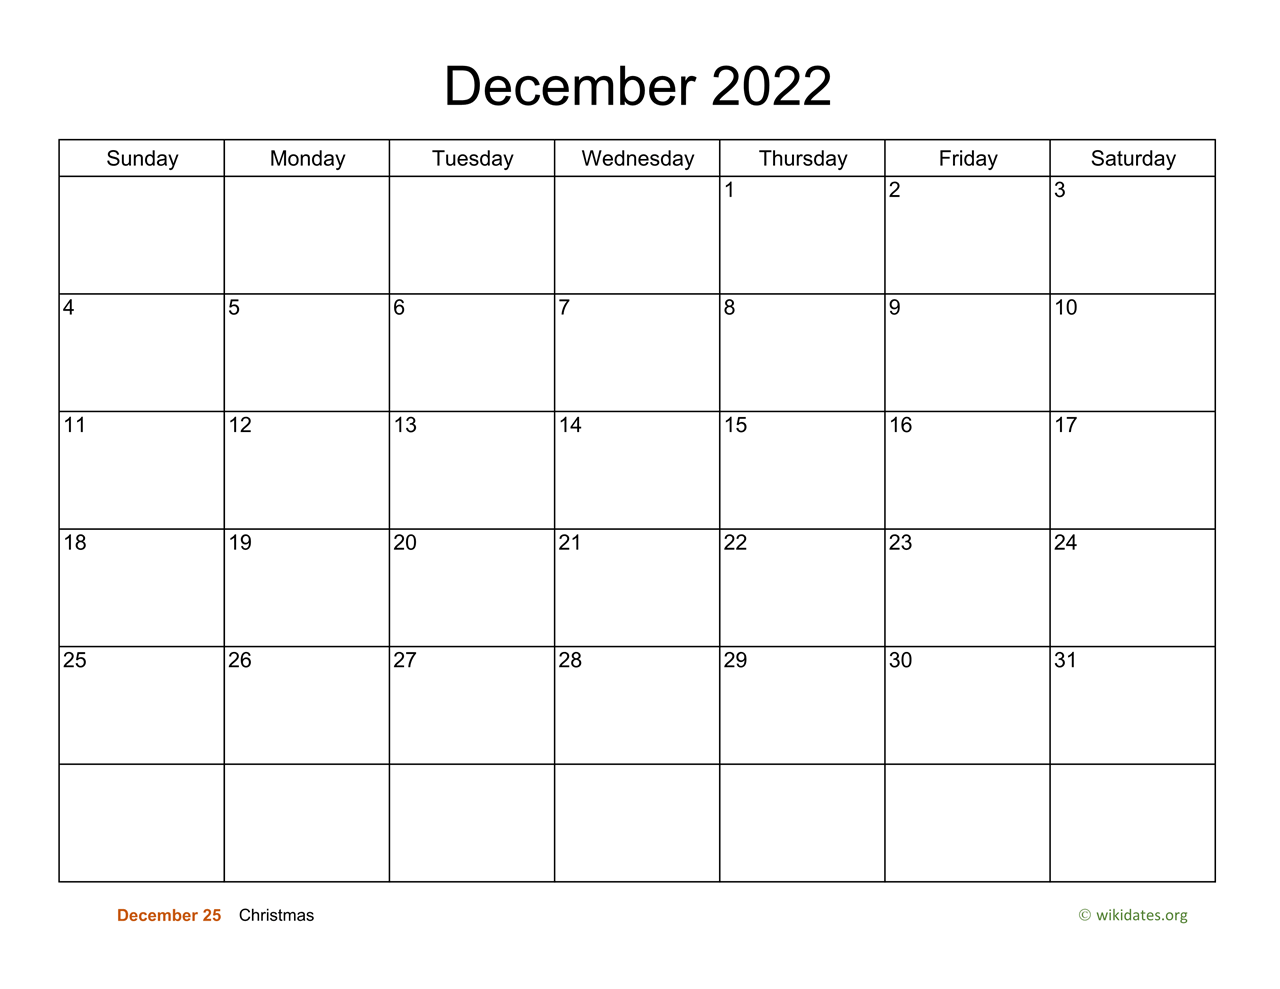 December Calendar 2022 Basic Calendar For December 2022 | Wikidates.org